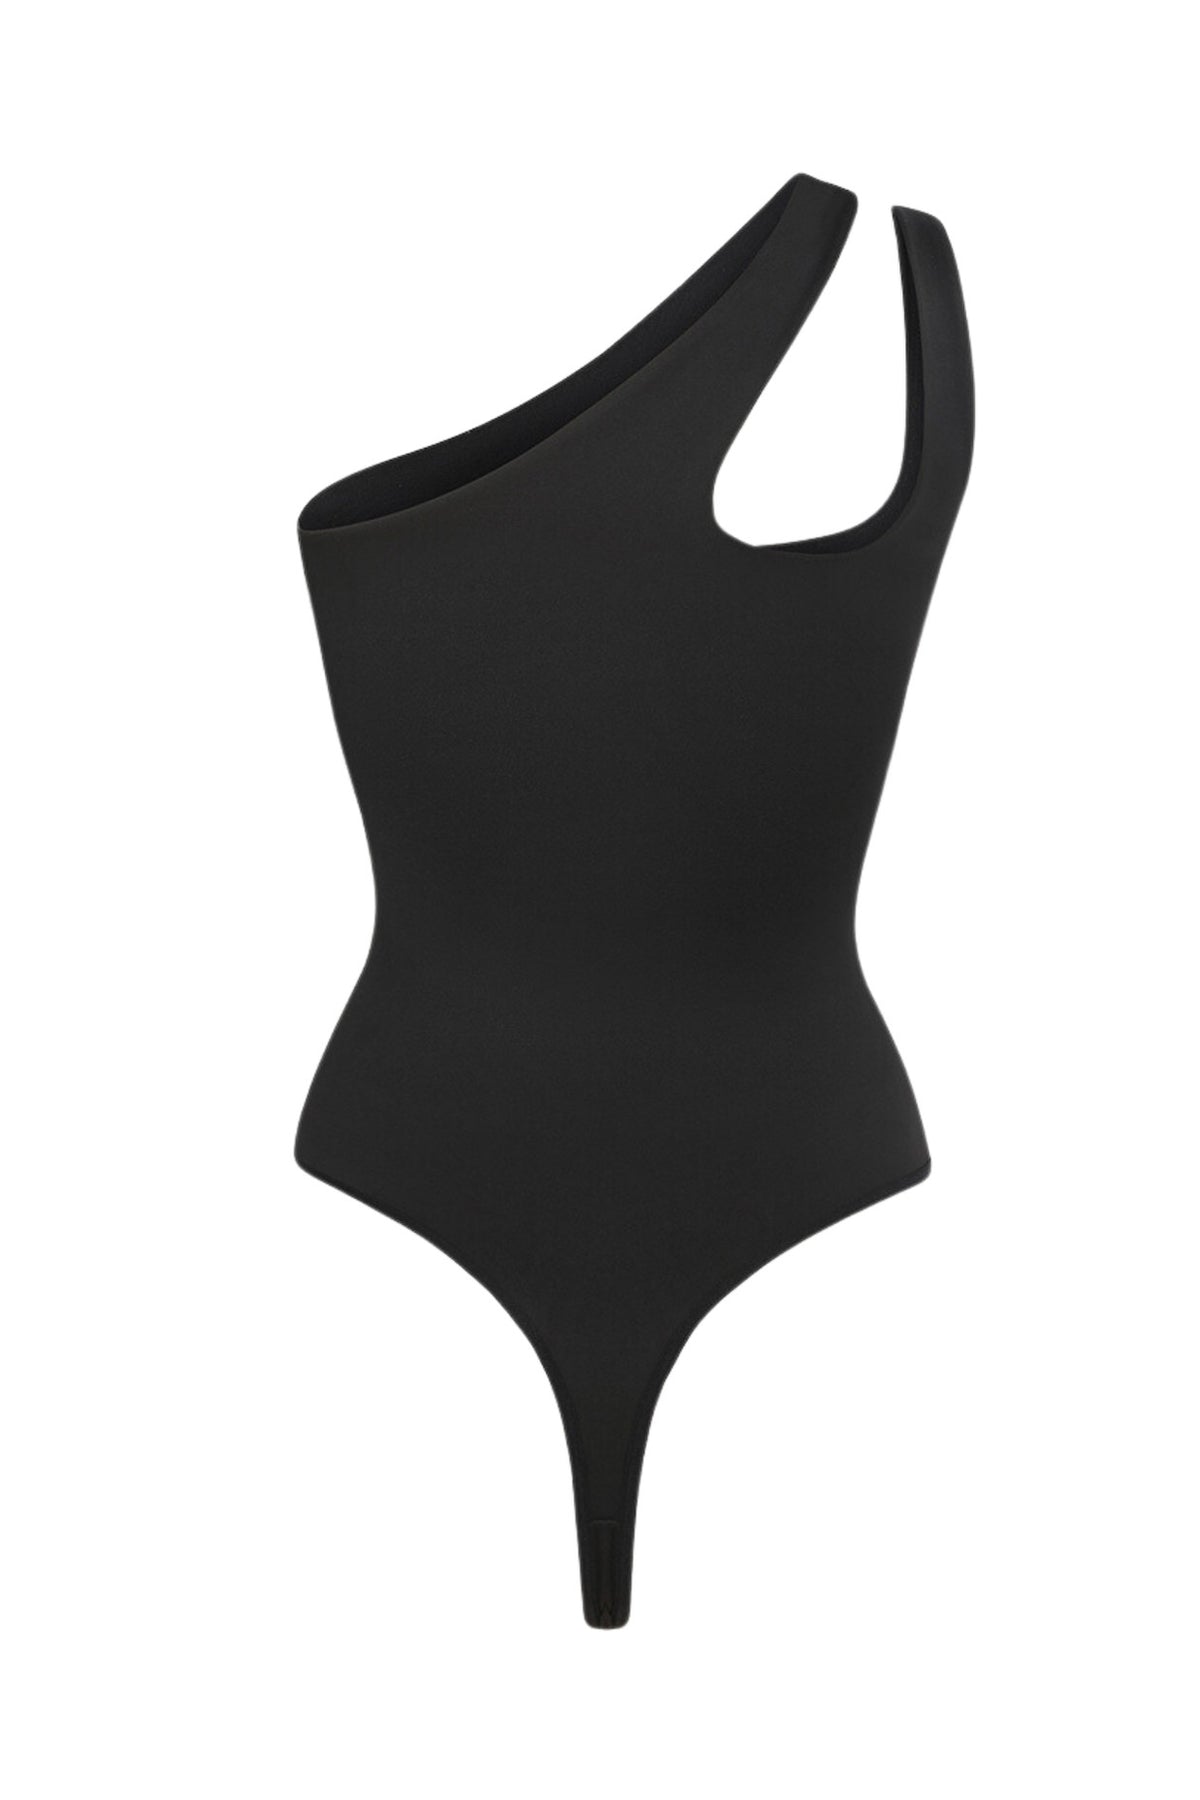 Coco Shaping Bodysuit - Black Contour Clothing